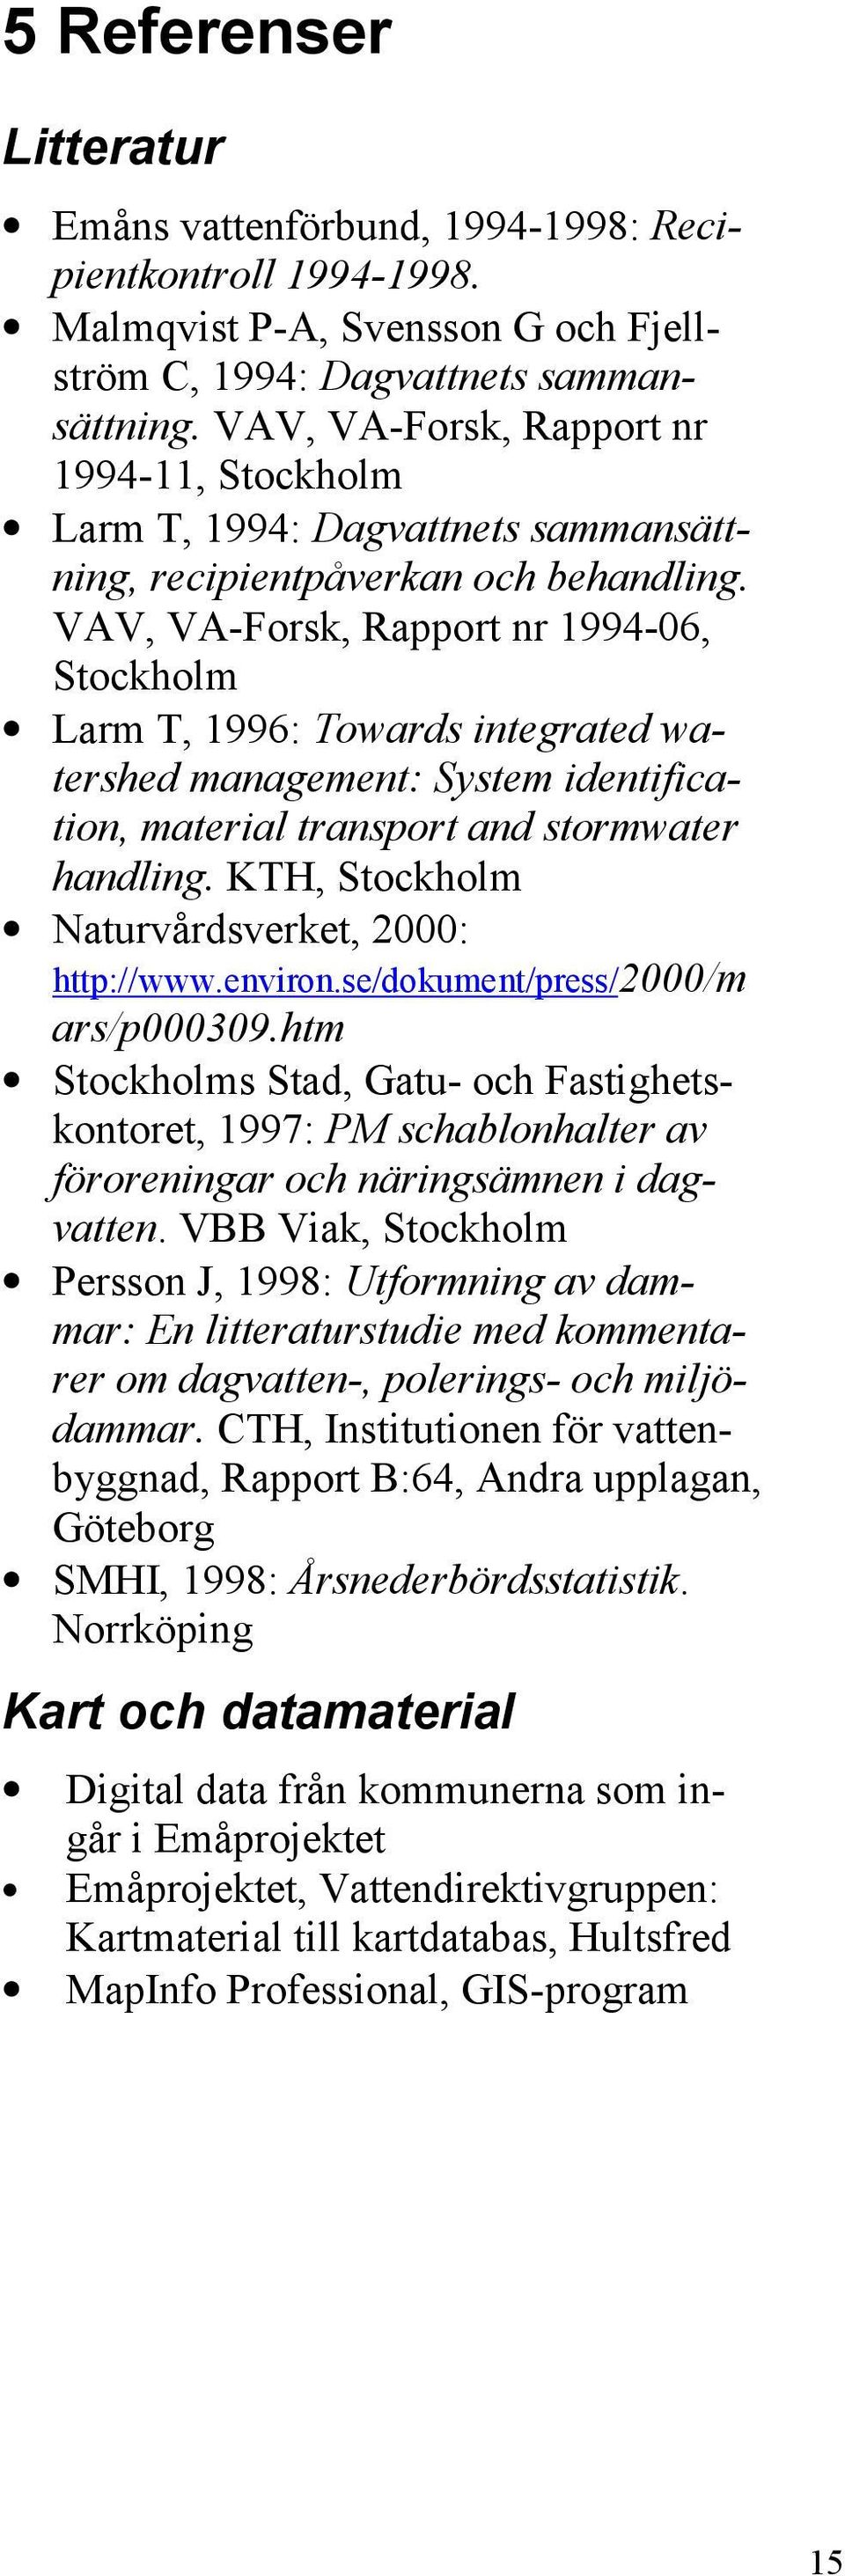 VAV, VA-Forsk, Rapport nr 1994-06, Stockholm Larm T, 1996: Towards integrated watershed management: System identification, material transport and stormwater handling.